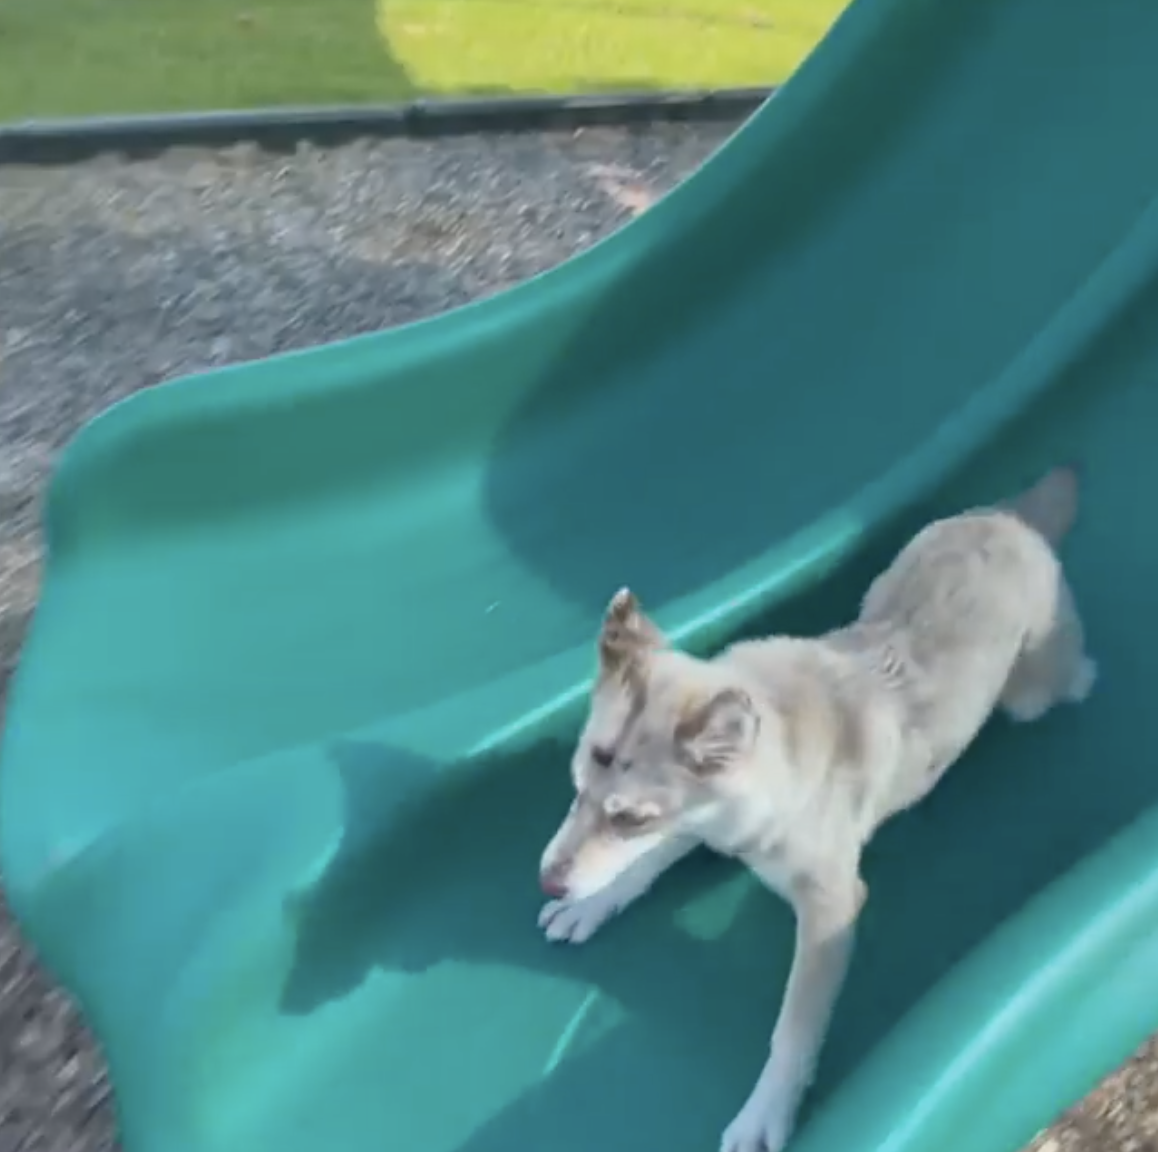 18 Dogs Enjoying Sliding Fun at the Park